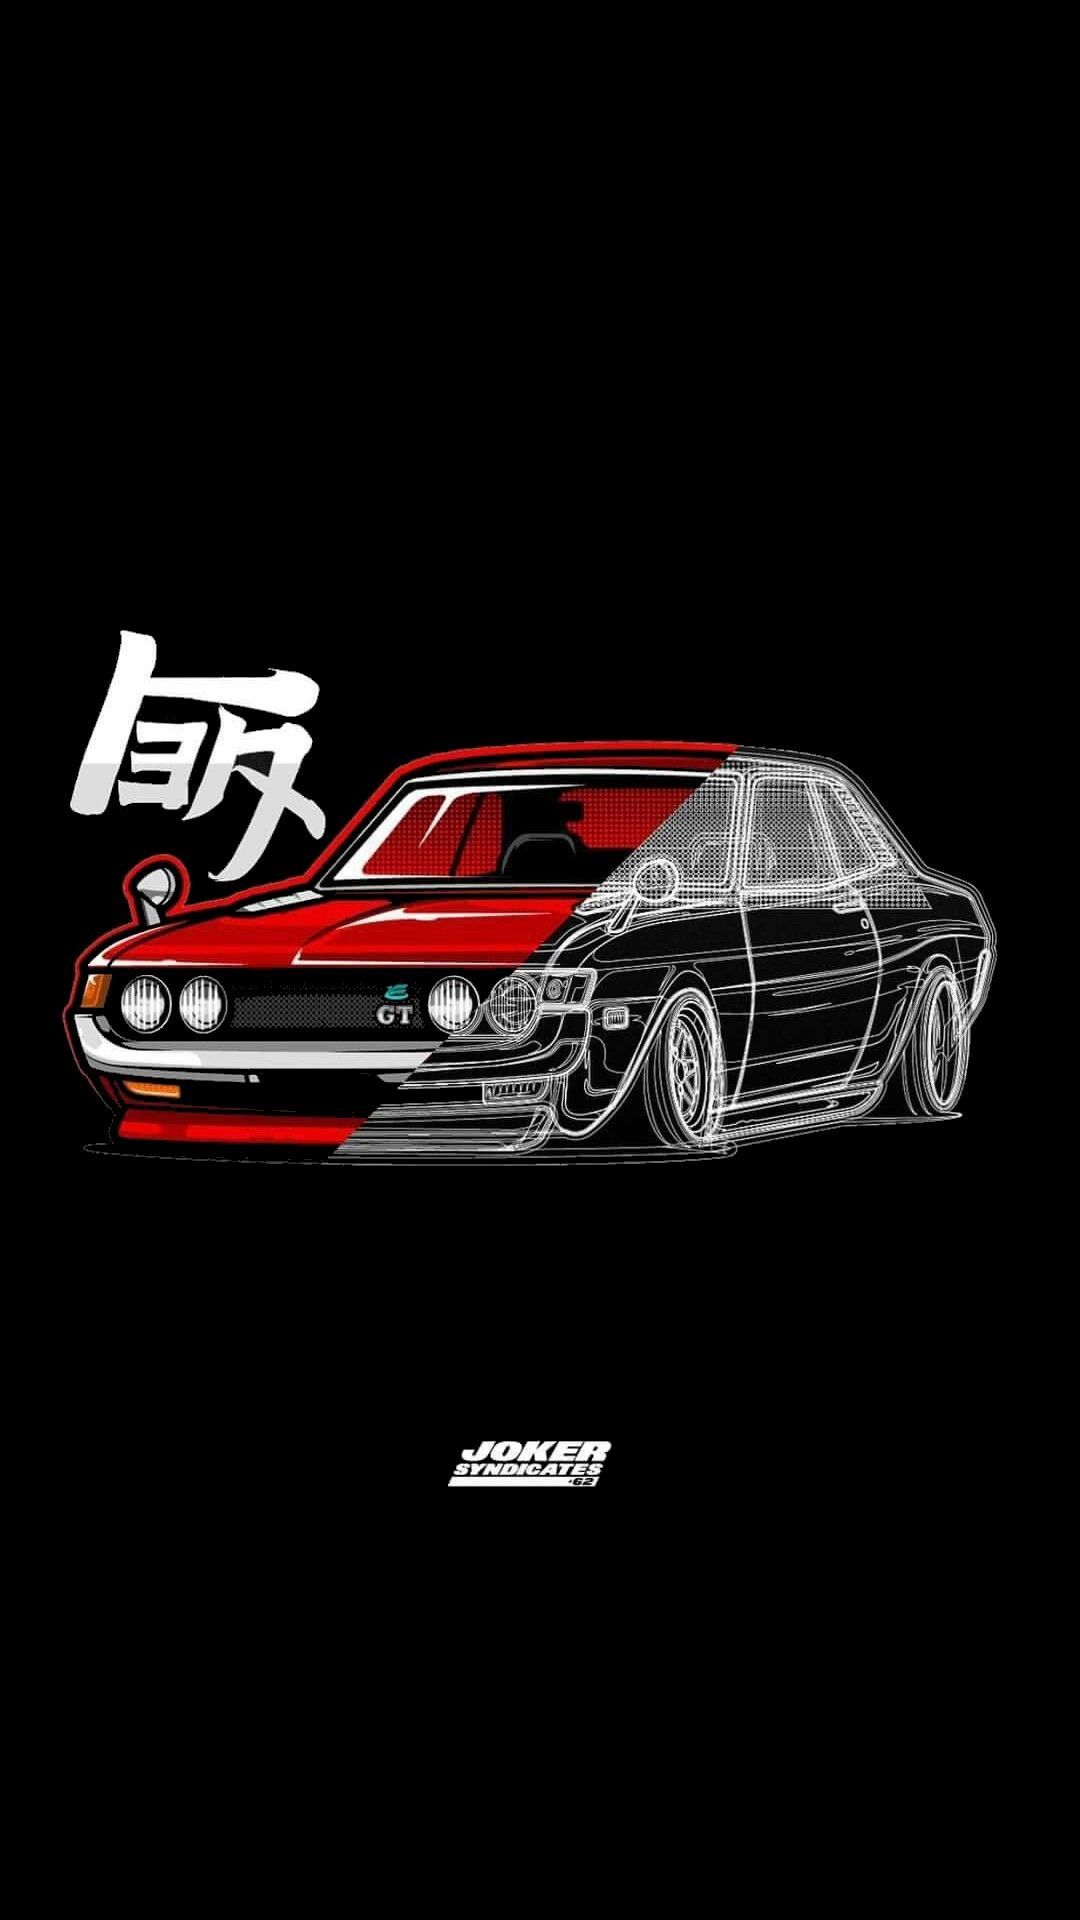 Download Free JDM Anime Wallpaper Discover more Anime Car JDM JDM Anime  JDM Car wallpaper  Car wallpapers Jdm wallpaper Art cars